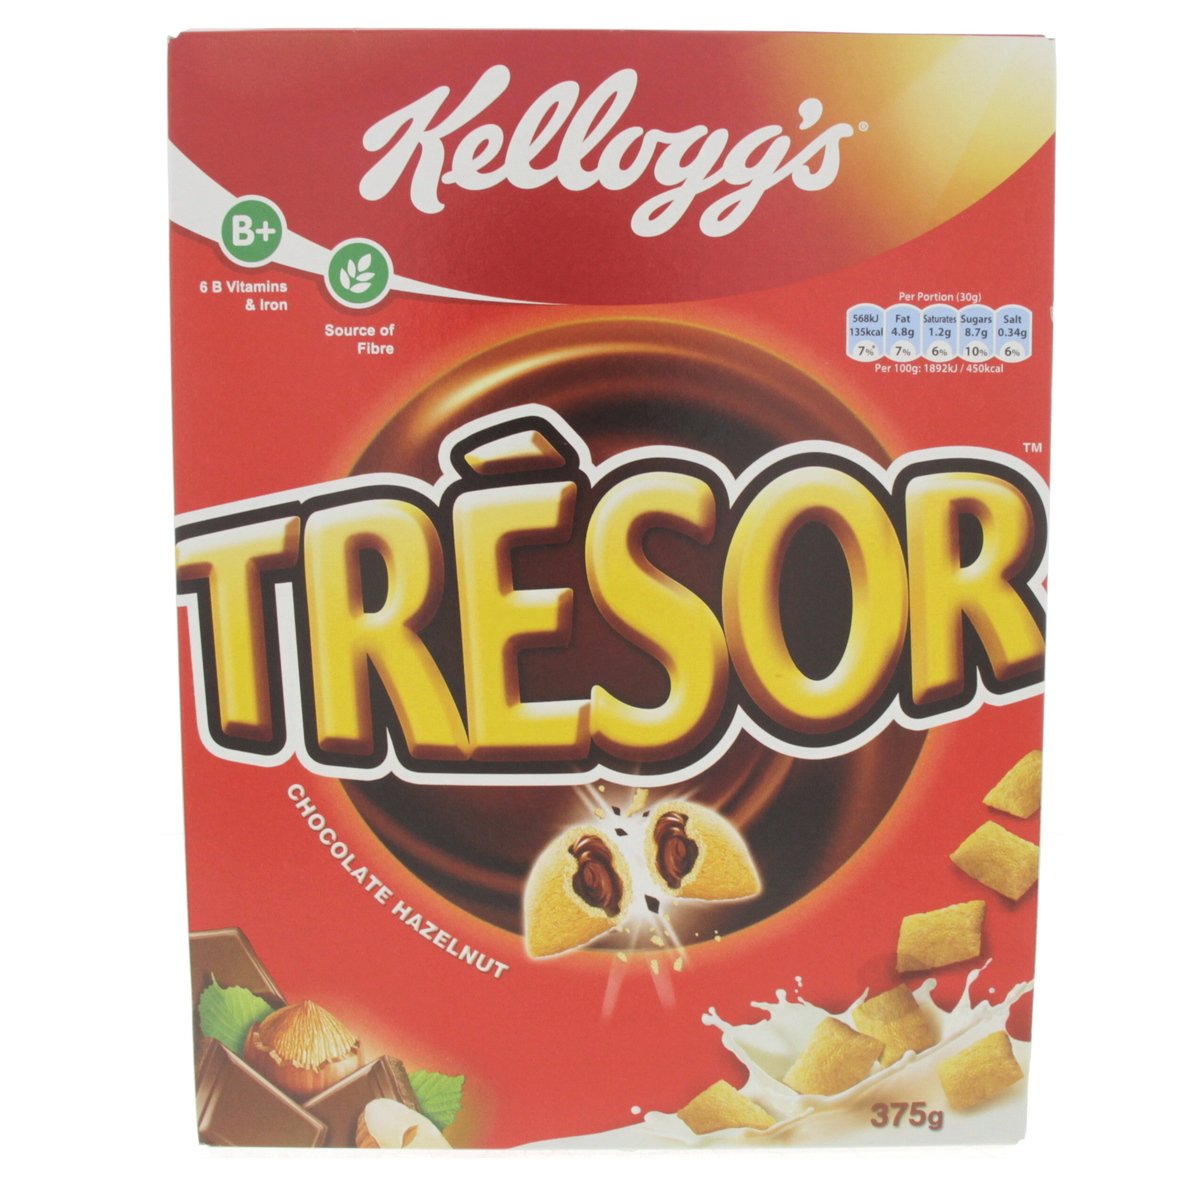 Kellogg's Tresor Chocolate Hazelnut 410g